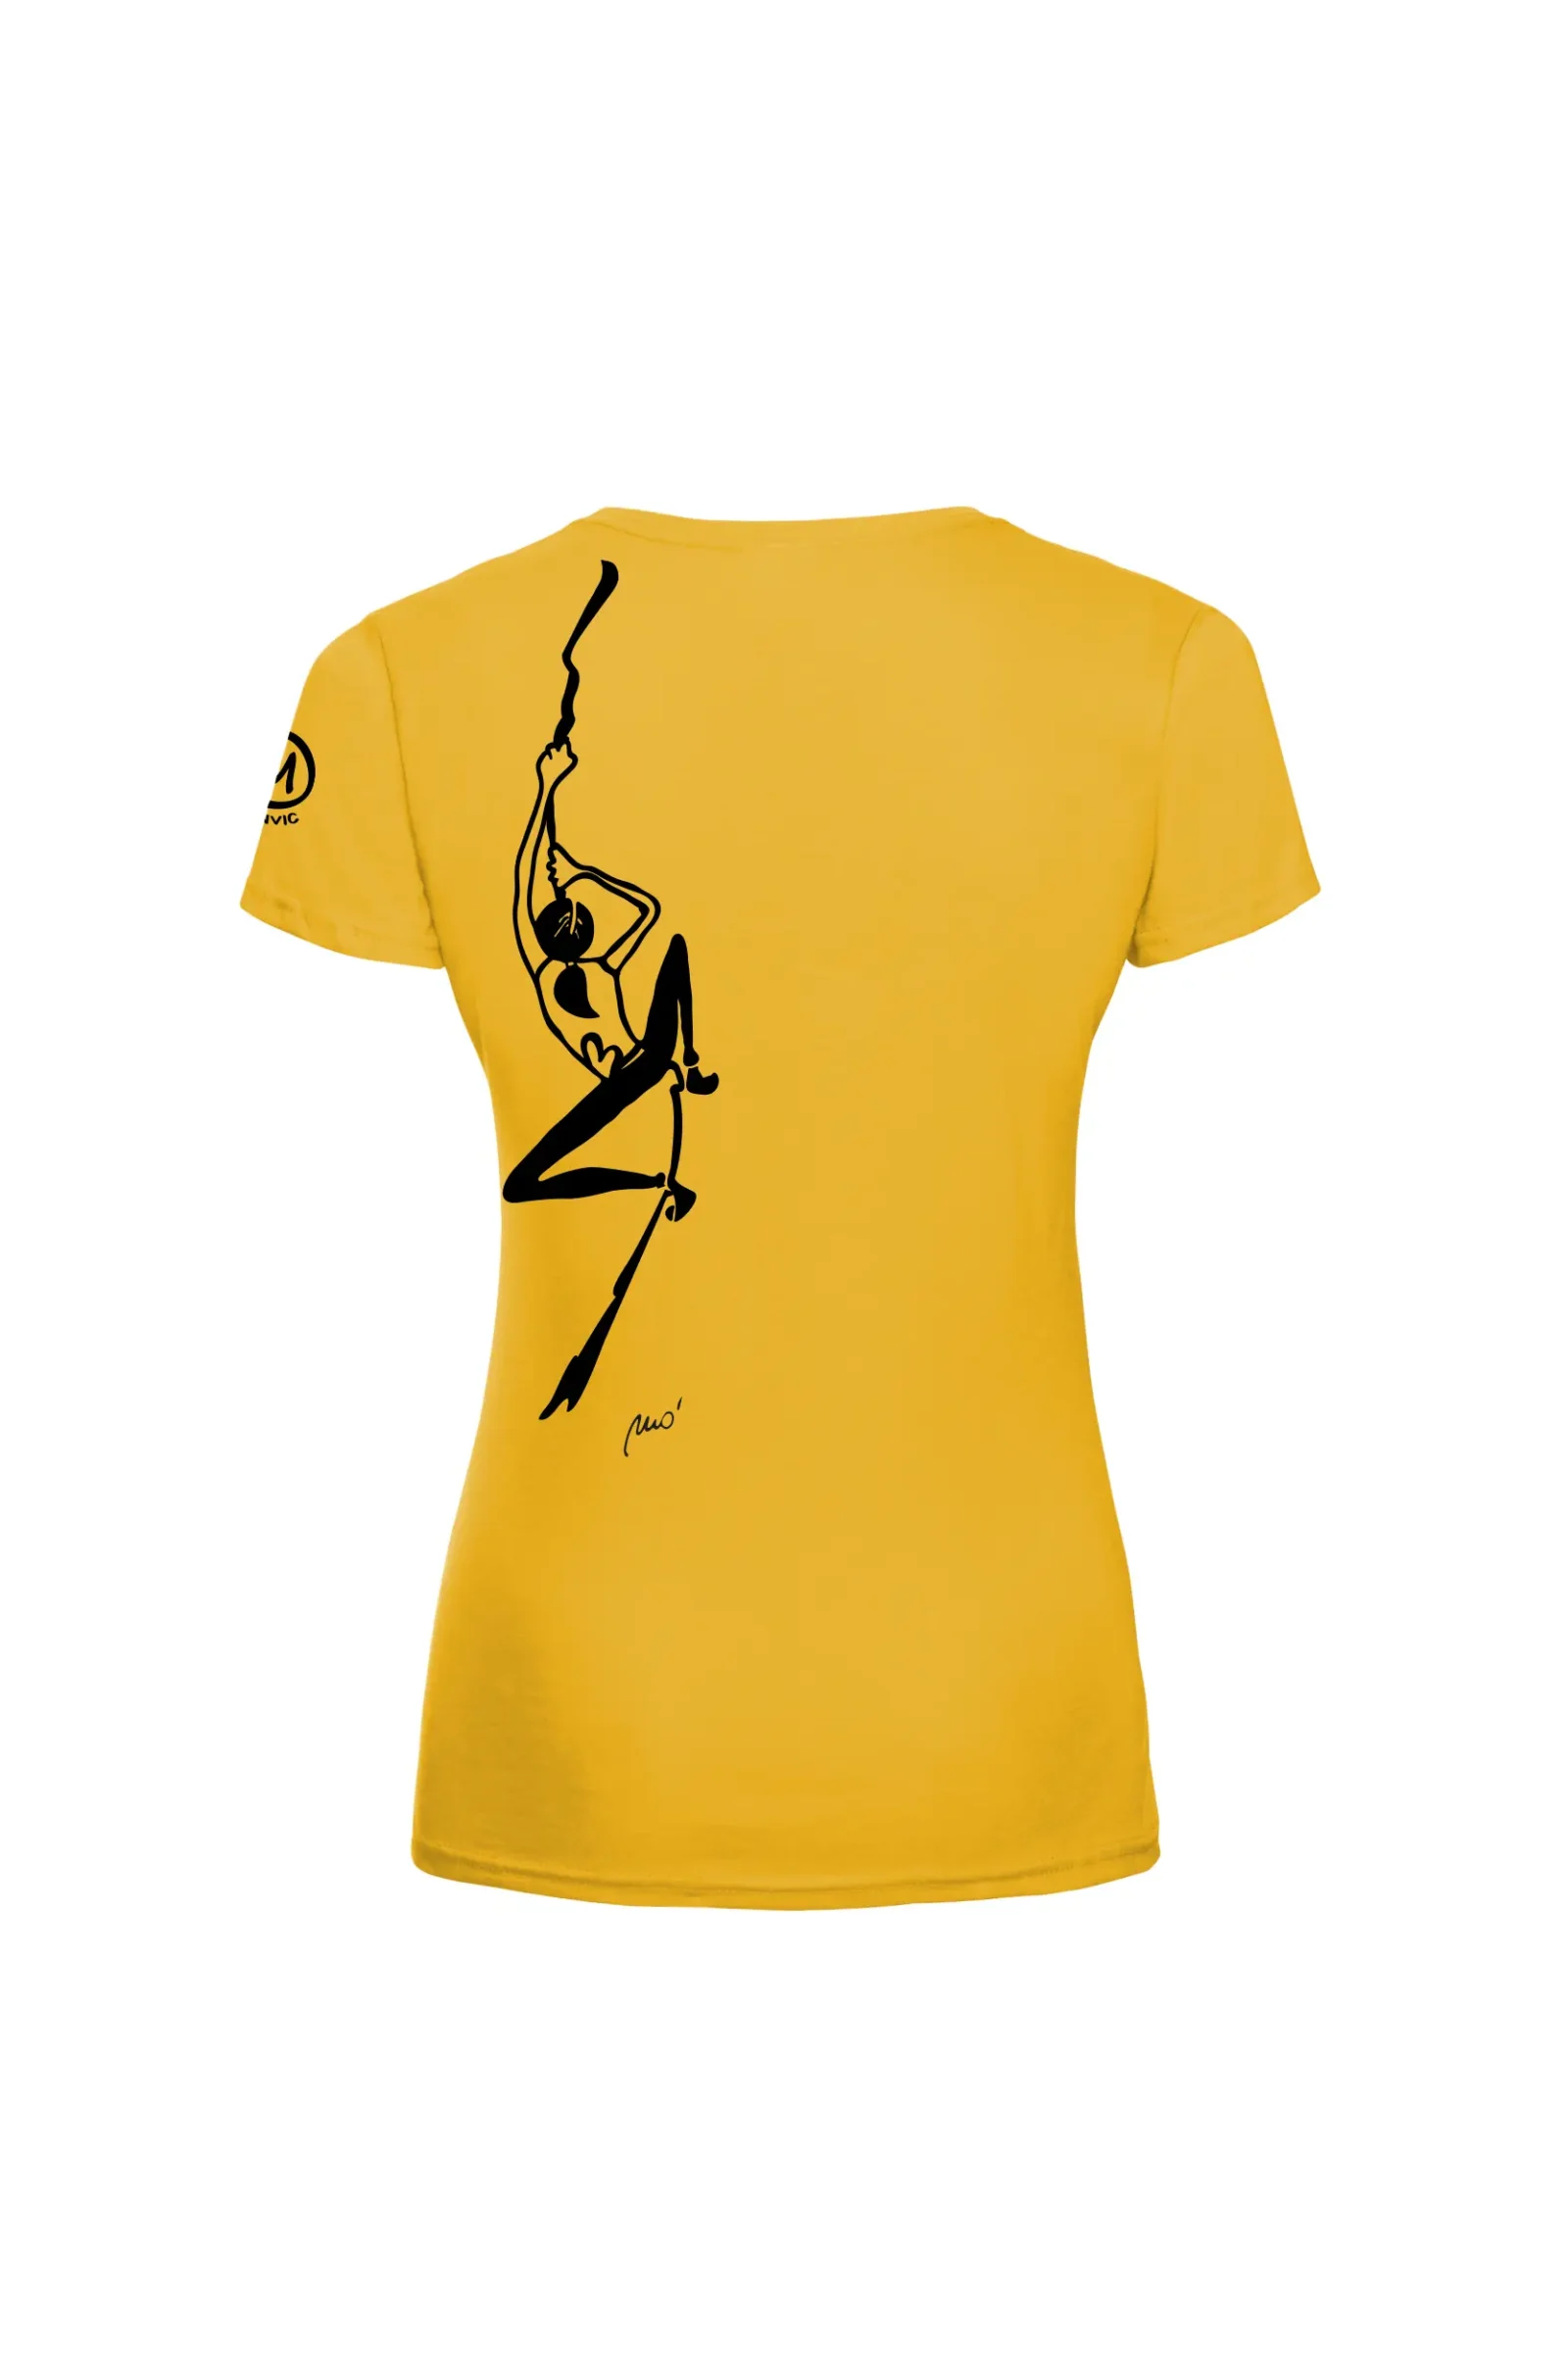 T-shirt escalade femme - coton jaune - graphisme "Sabry" - SHARON by MONVIC